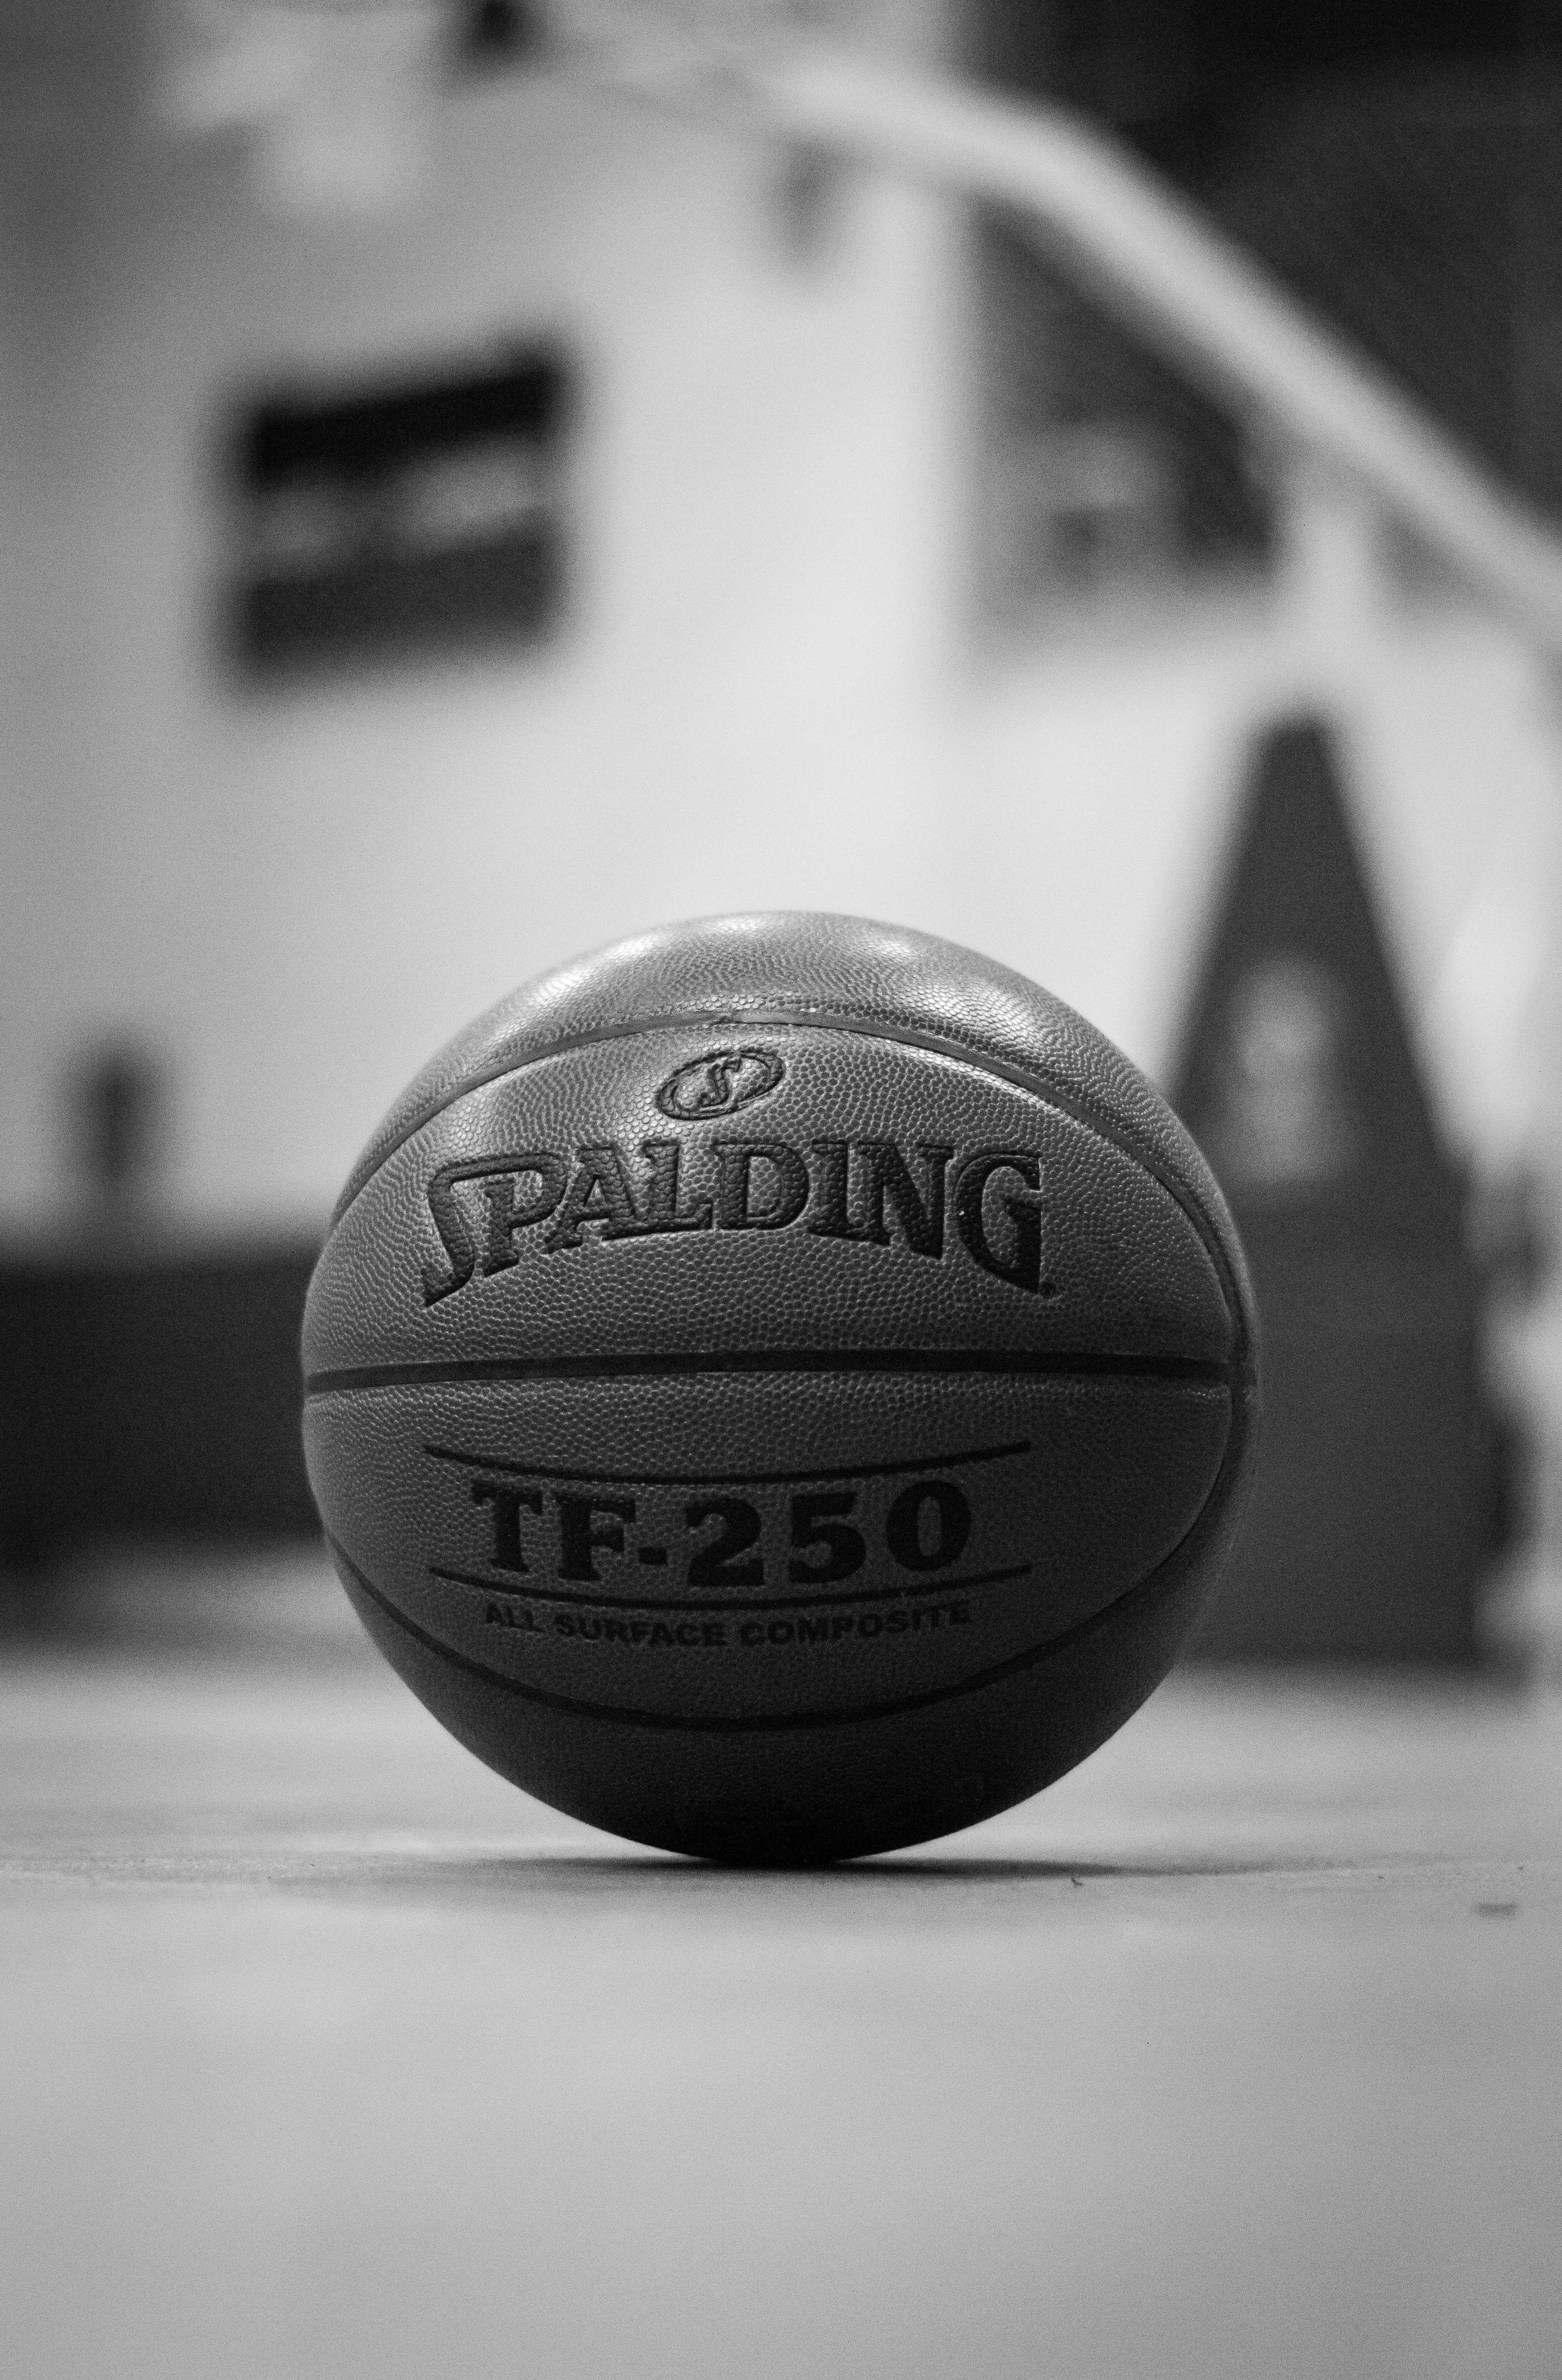 Spalding Tf 250 Basketball Free Image